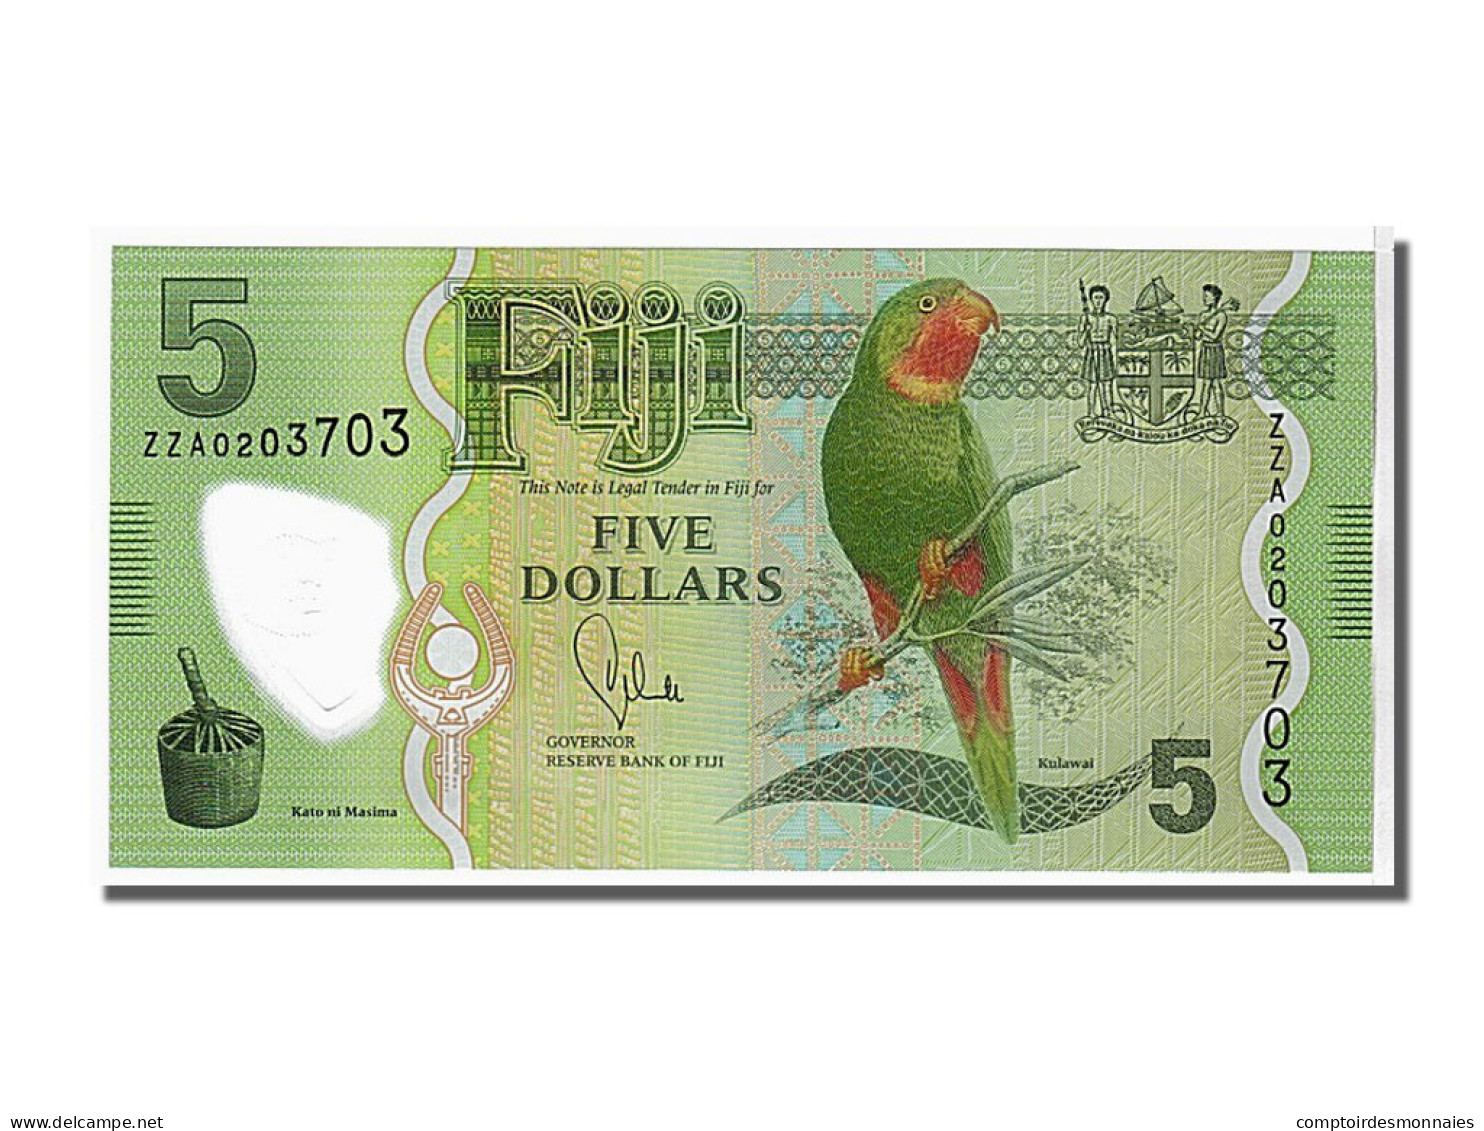 Billet, Fiji, 5 Dollars, 2013, KM:115, NEUF - Fidji